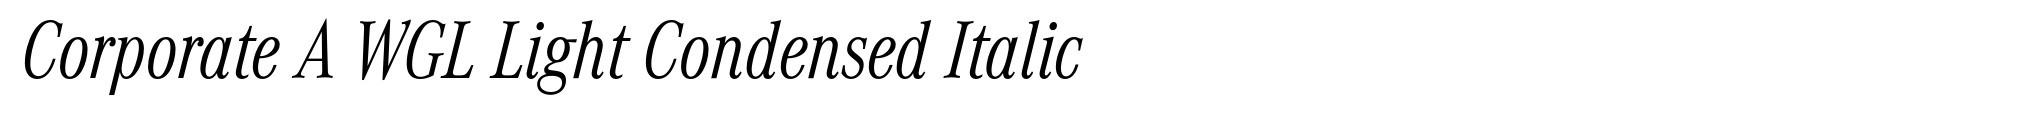 Corporate A WGL Light Condensed Italic image